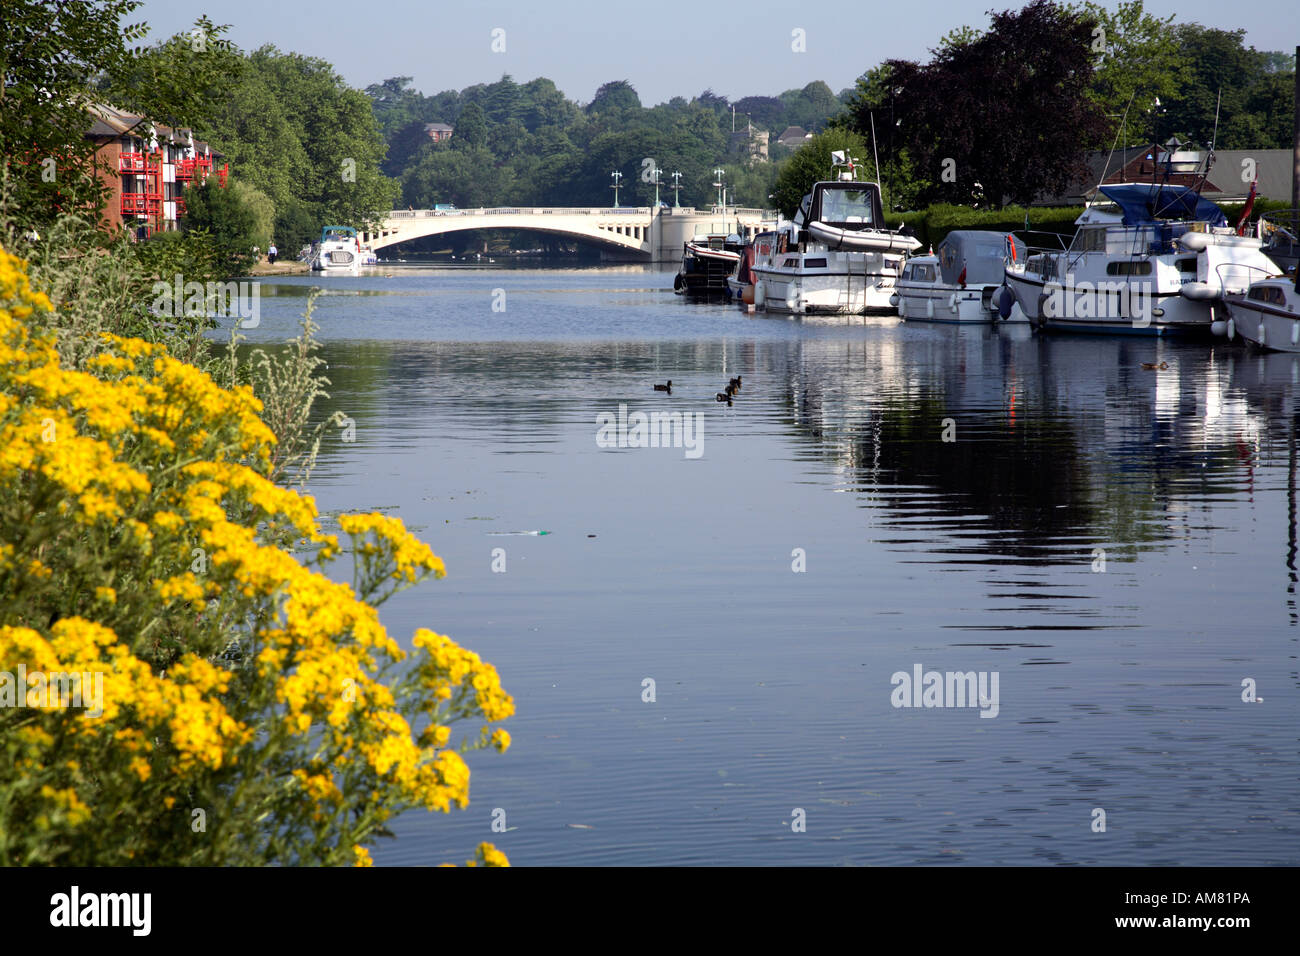 River Thames in Reading looking towards Caversham Bridge Stock Photo